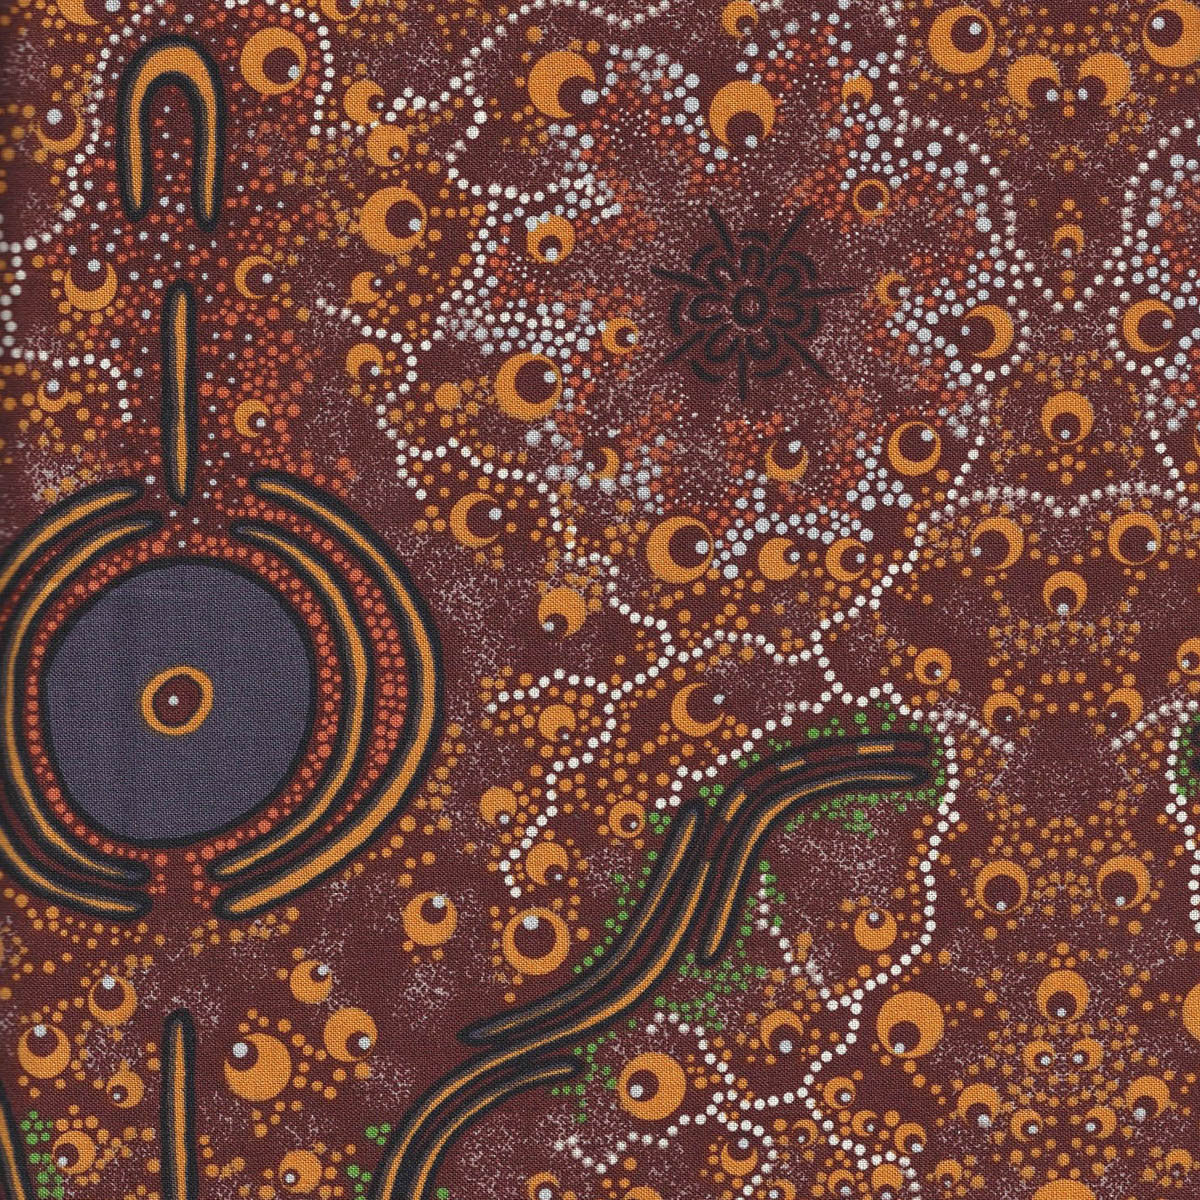 DREAMTIME KNOWLEDGE BURGUNDY by Aboriginal Artist TREPHINA SULTAN